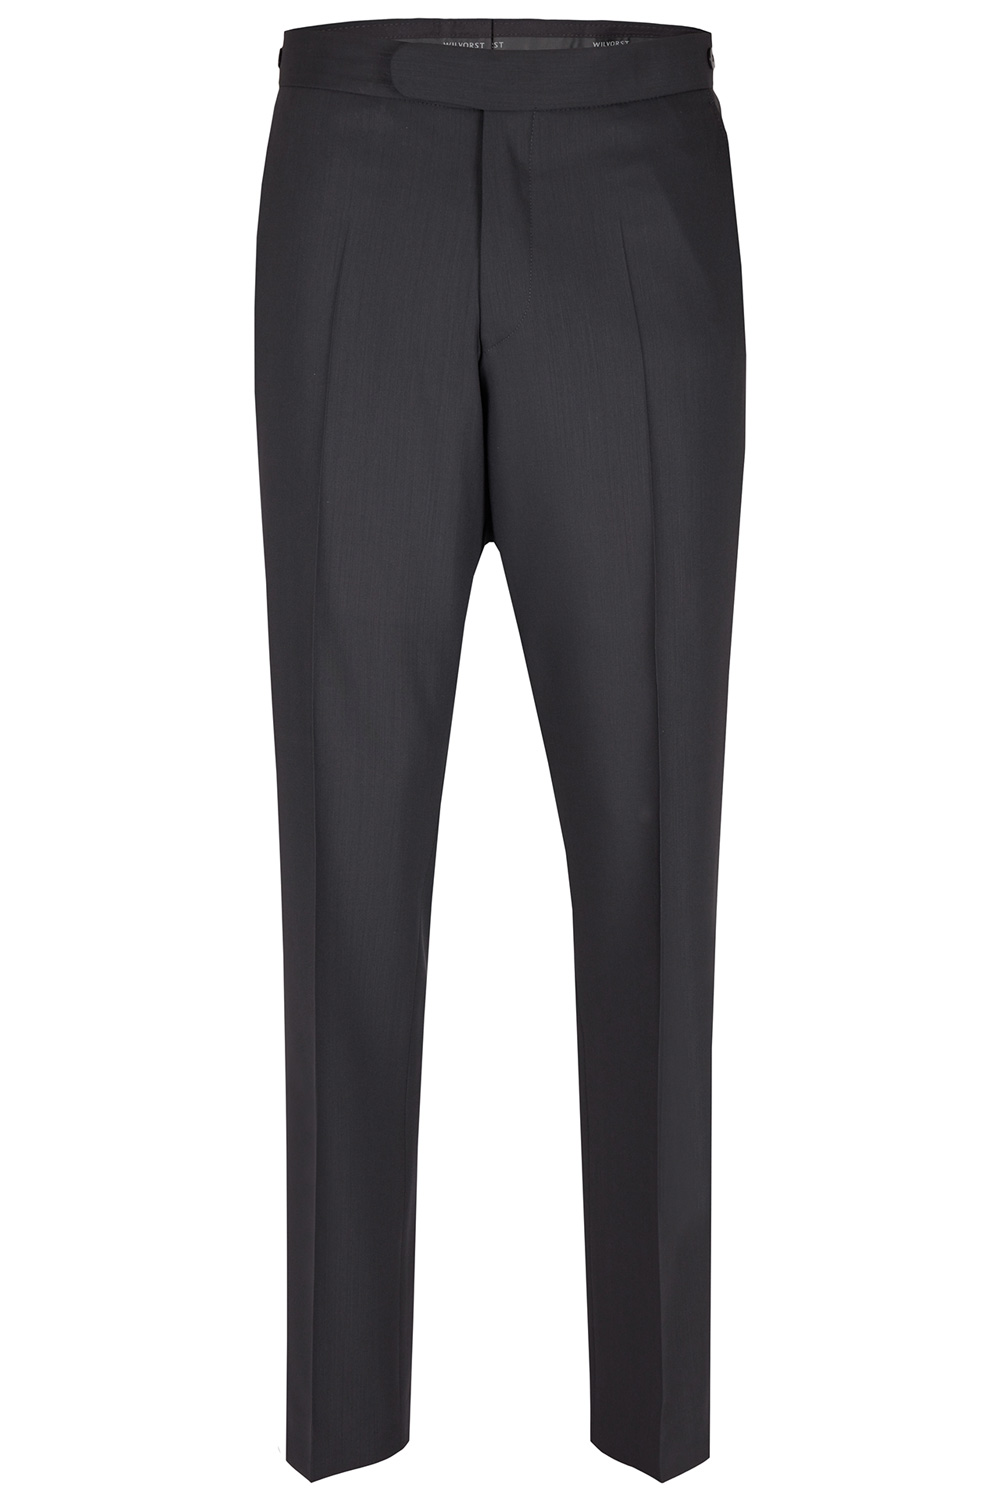 Black Tuxedo Smoking Jacket 3 Piece Suit - Tom Murphy's Formal and Menswear